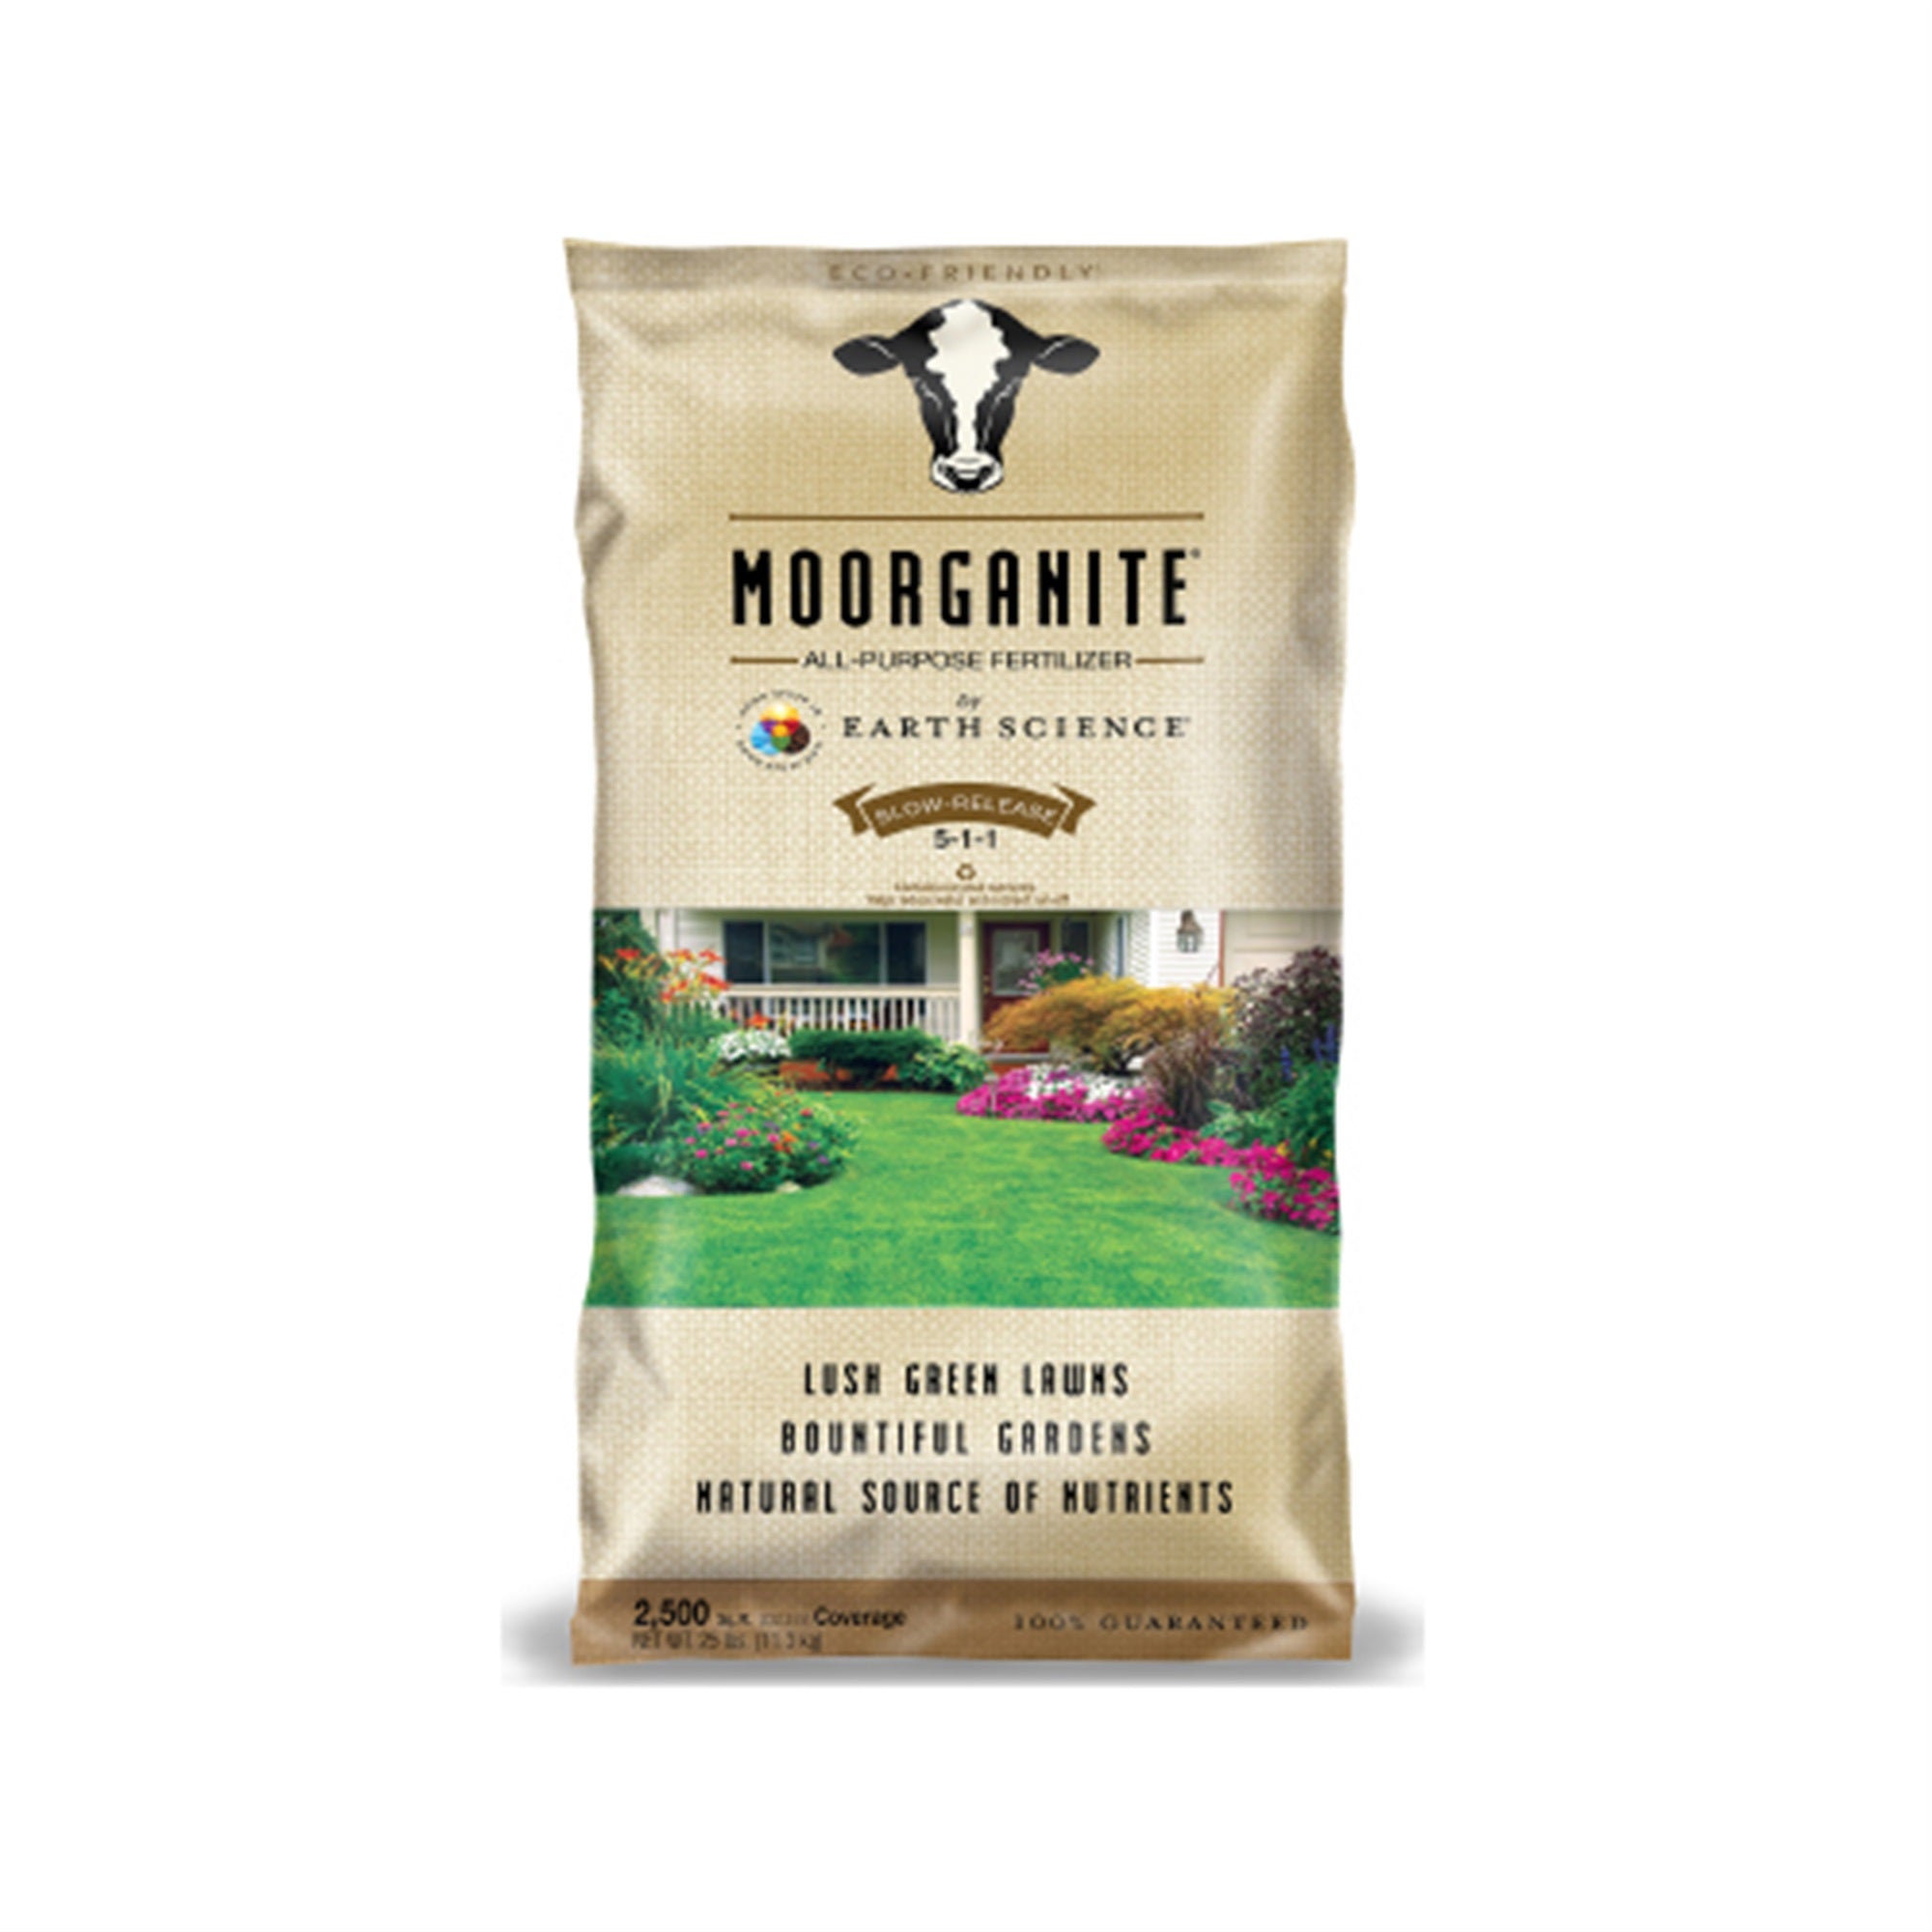 Earth Science Moorganite Lawn/Garden Fertilizers Plant Food, 2500sft Bag